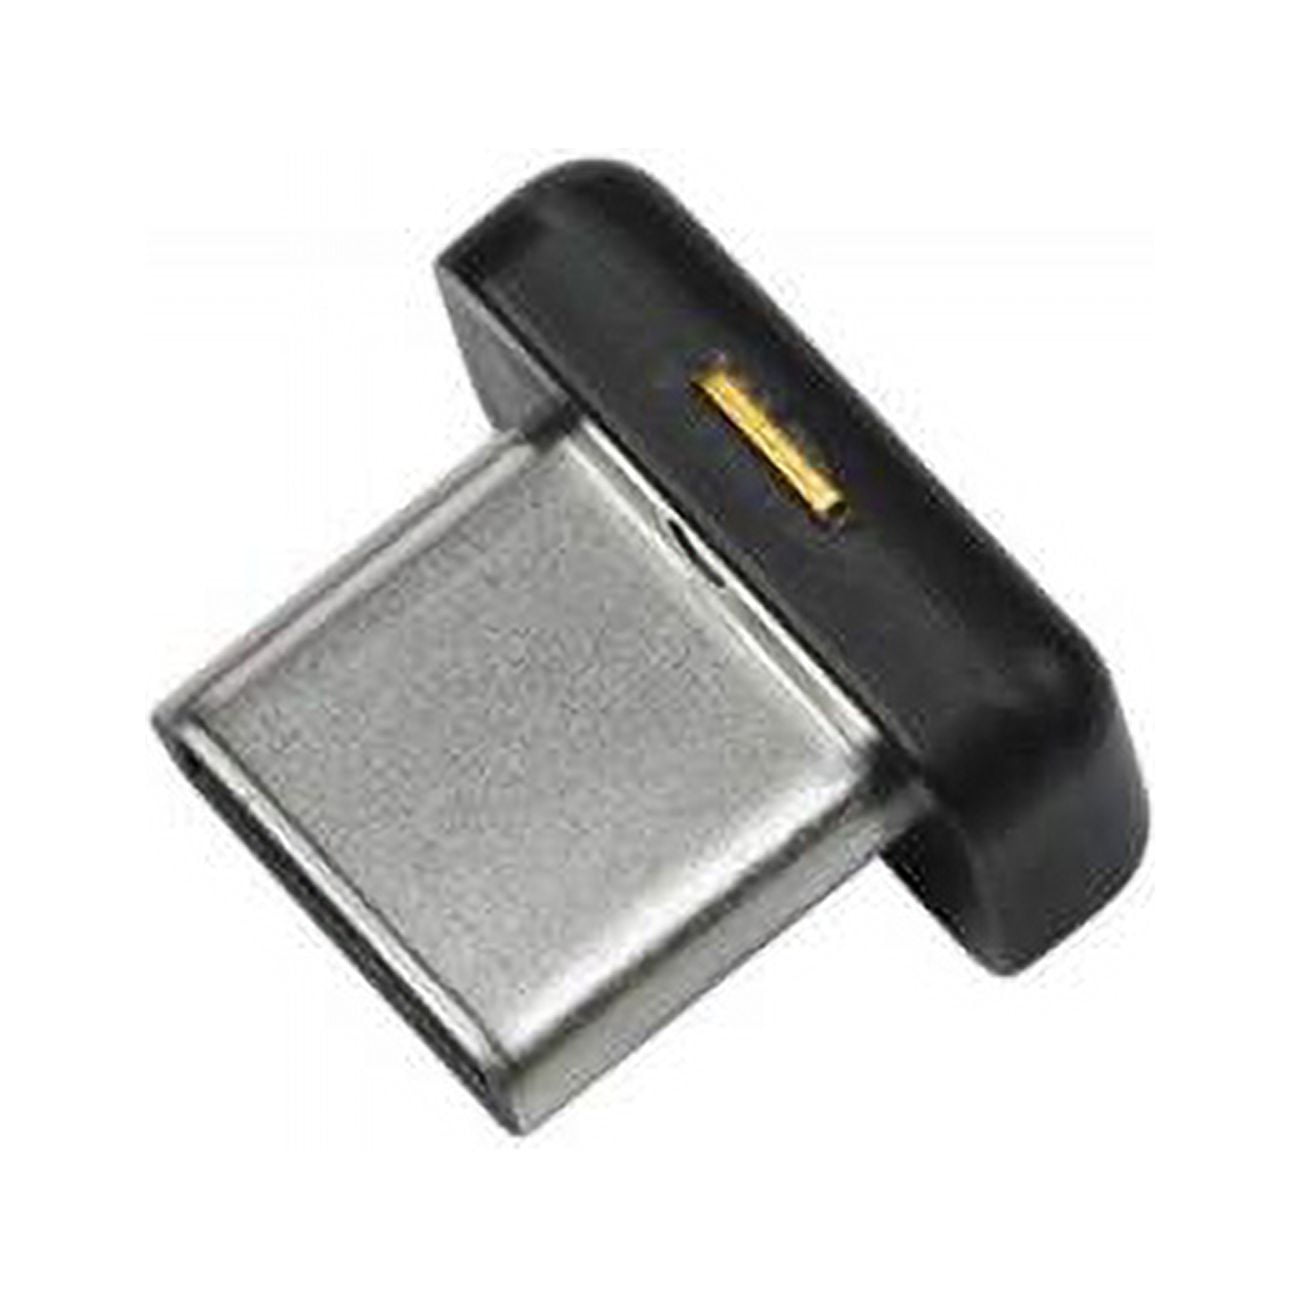 Product  Yubico YubiKey 5C NFC - USB-C security key